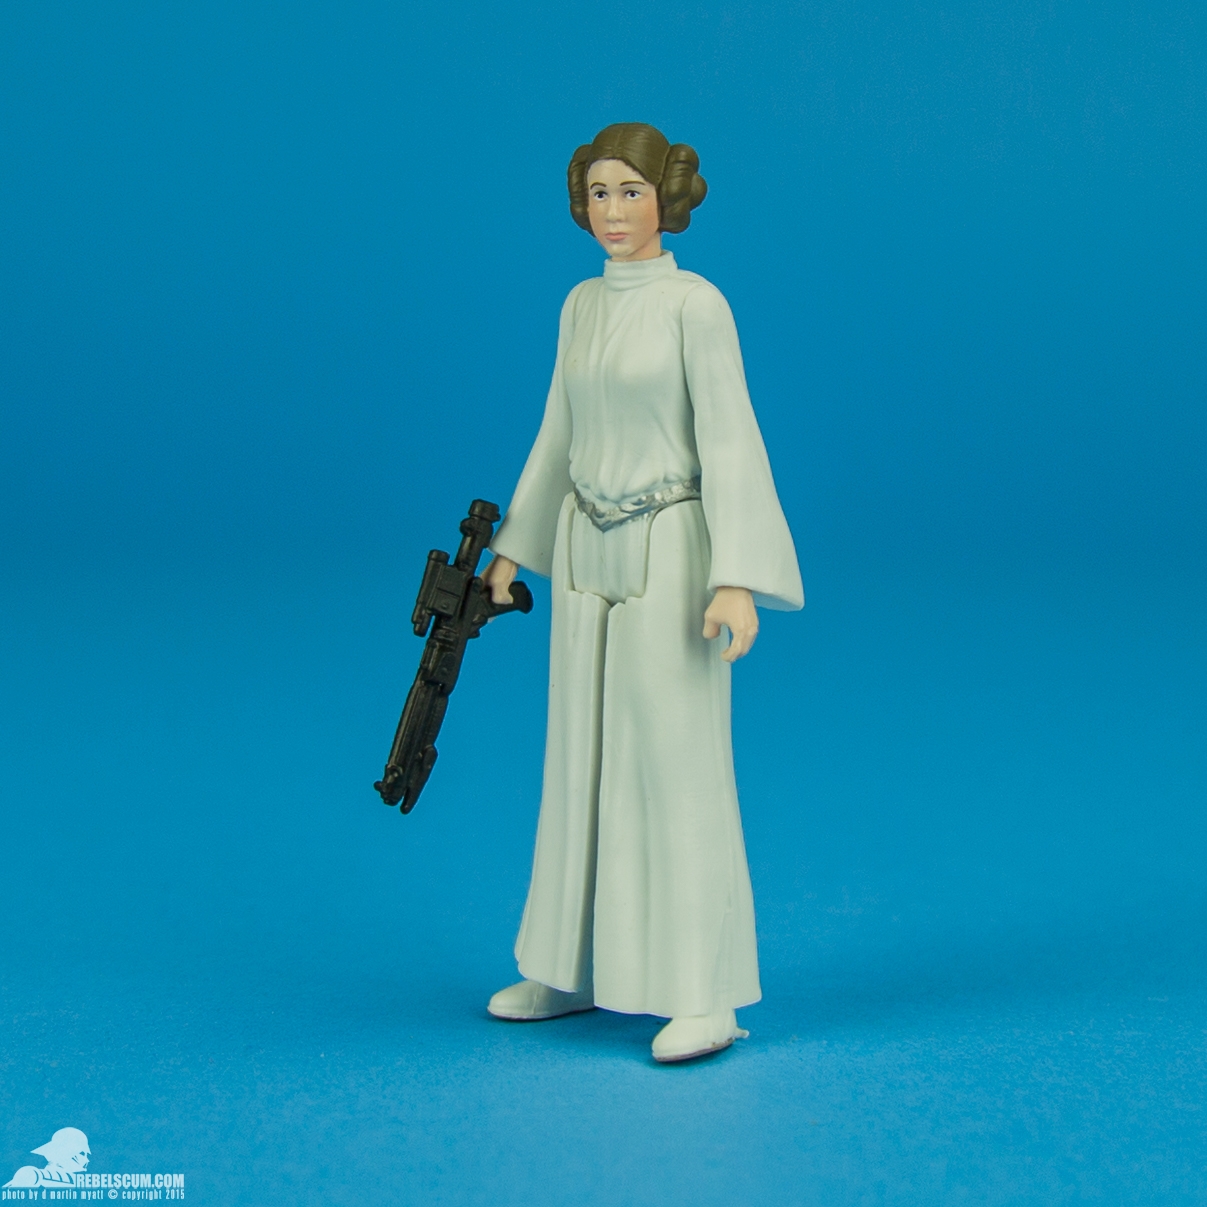 Han-Solo-Princess-Leia-The-Force-Awakens-Hasbro-011.jpg